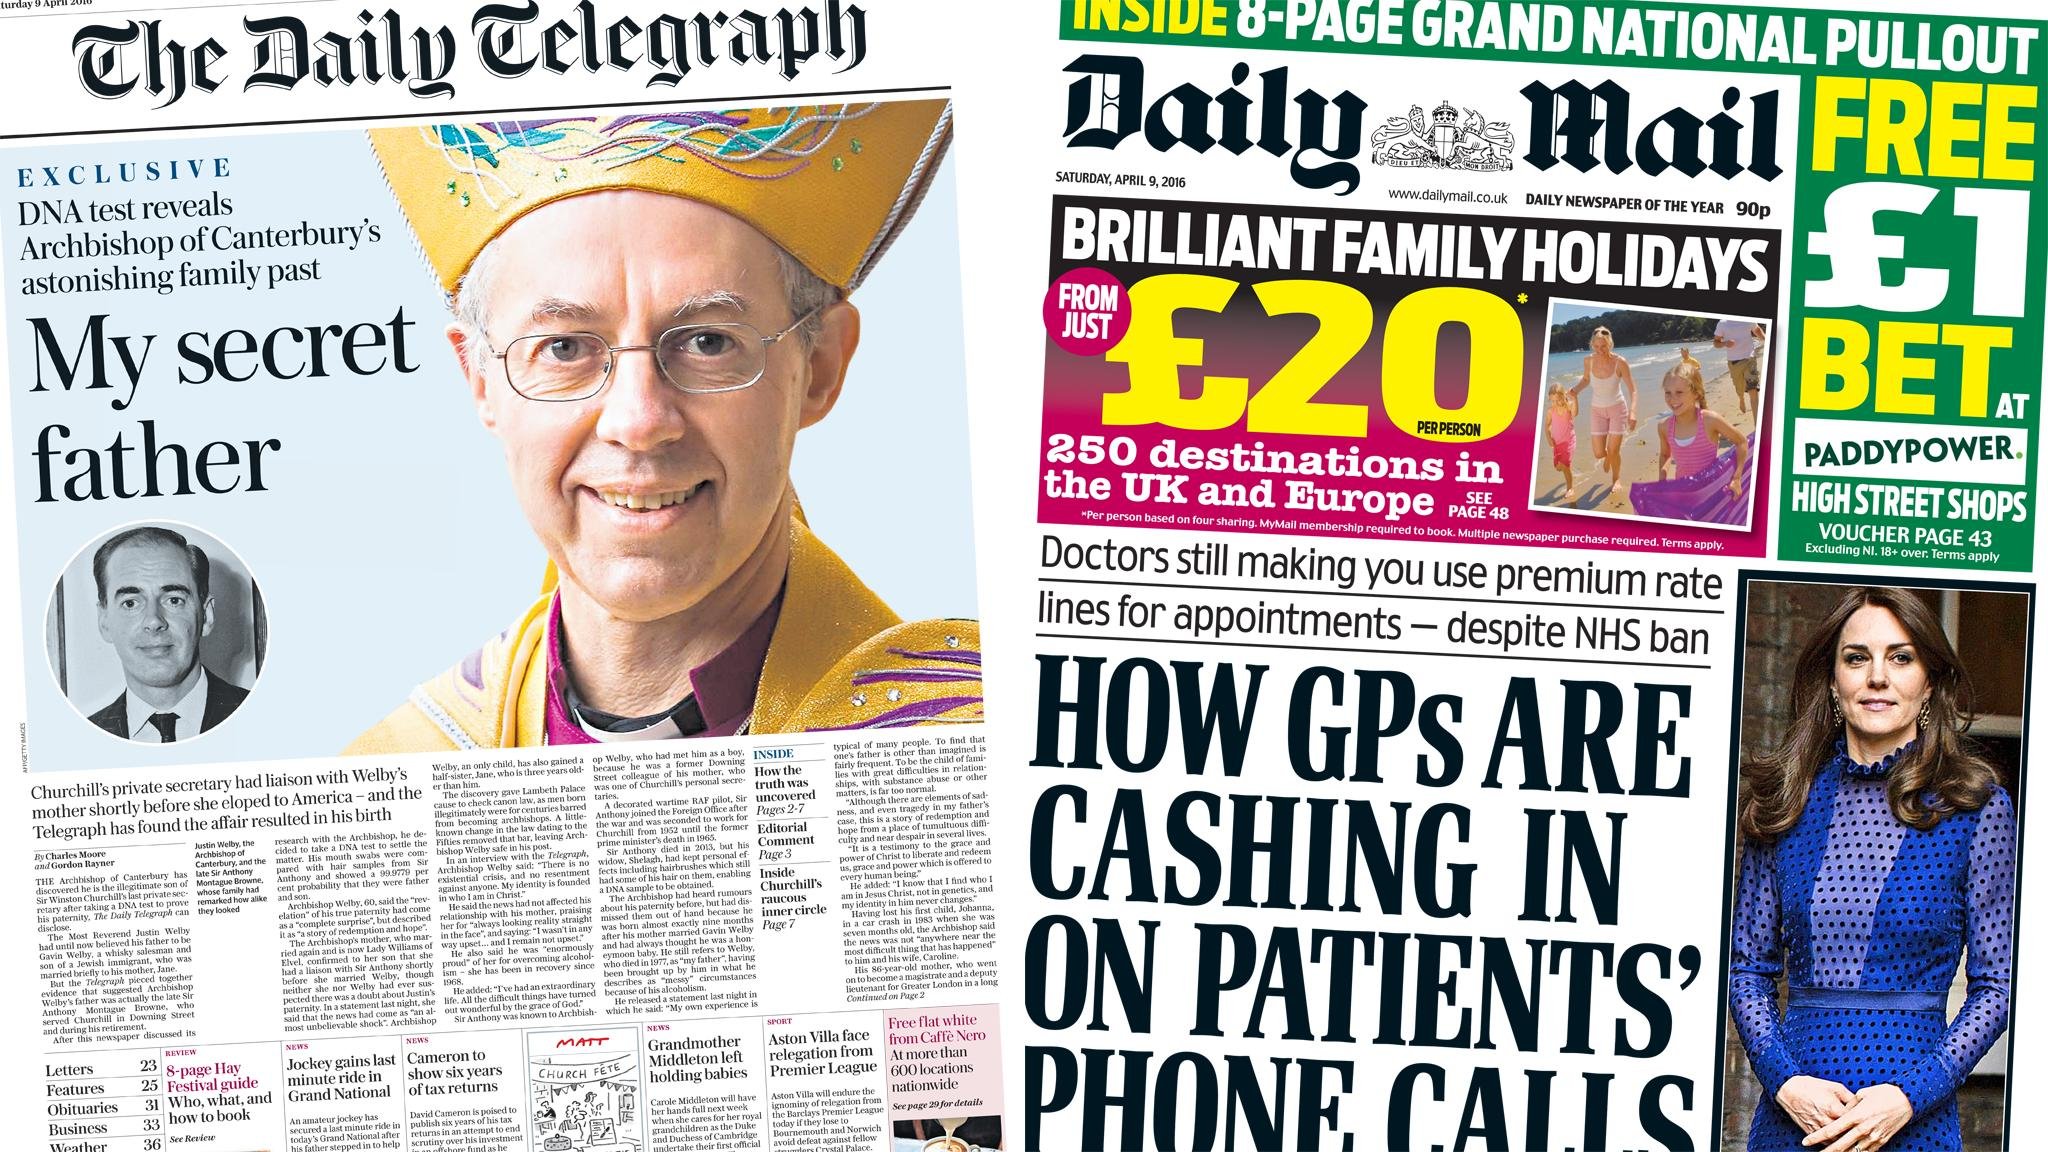 Newspaper headlines Archbishops surprise and GPs phone calls